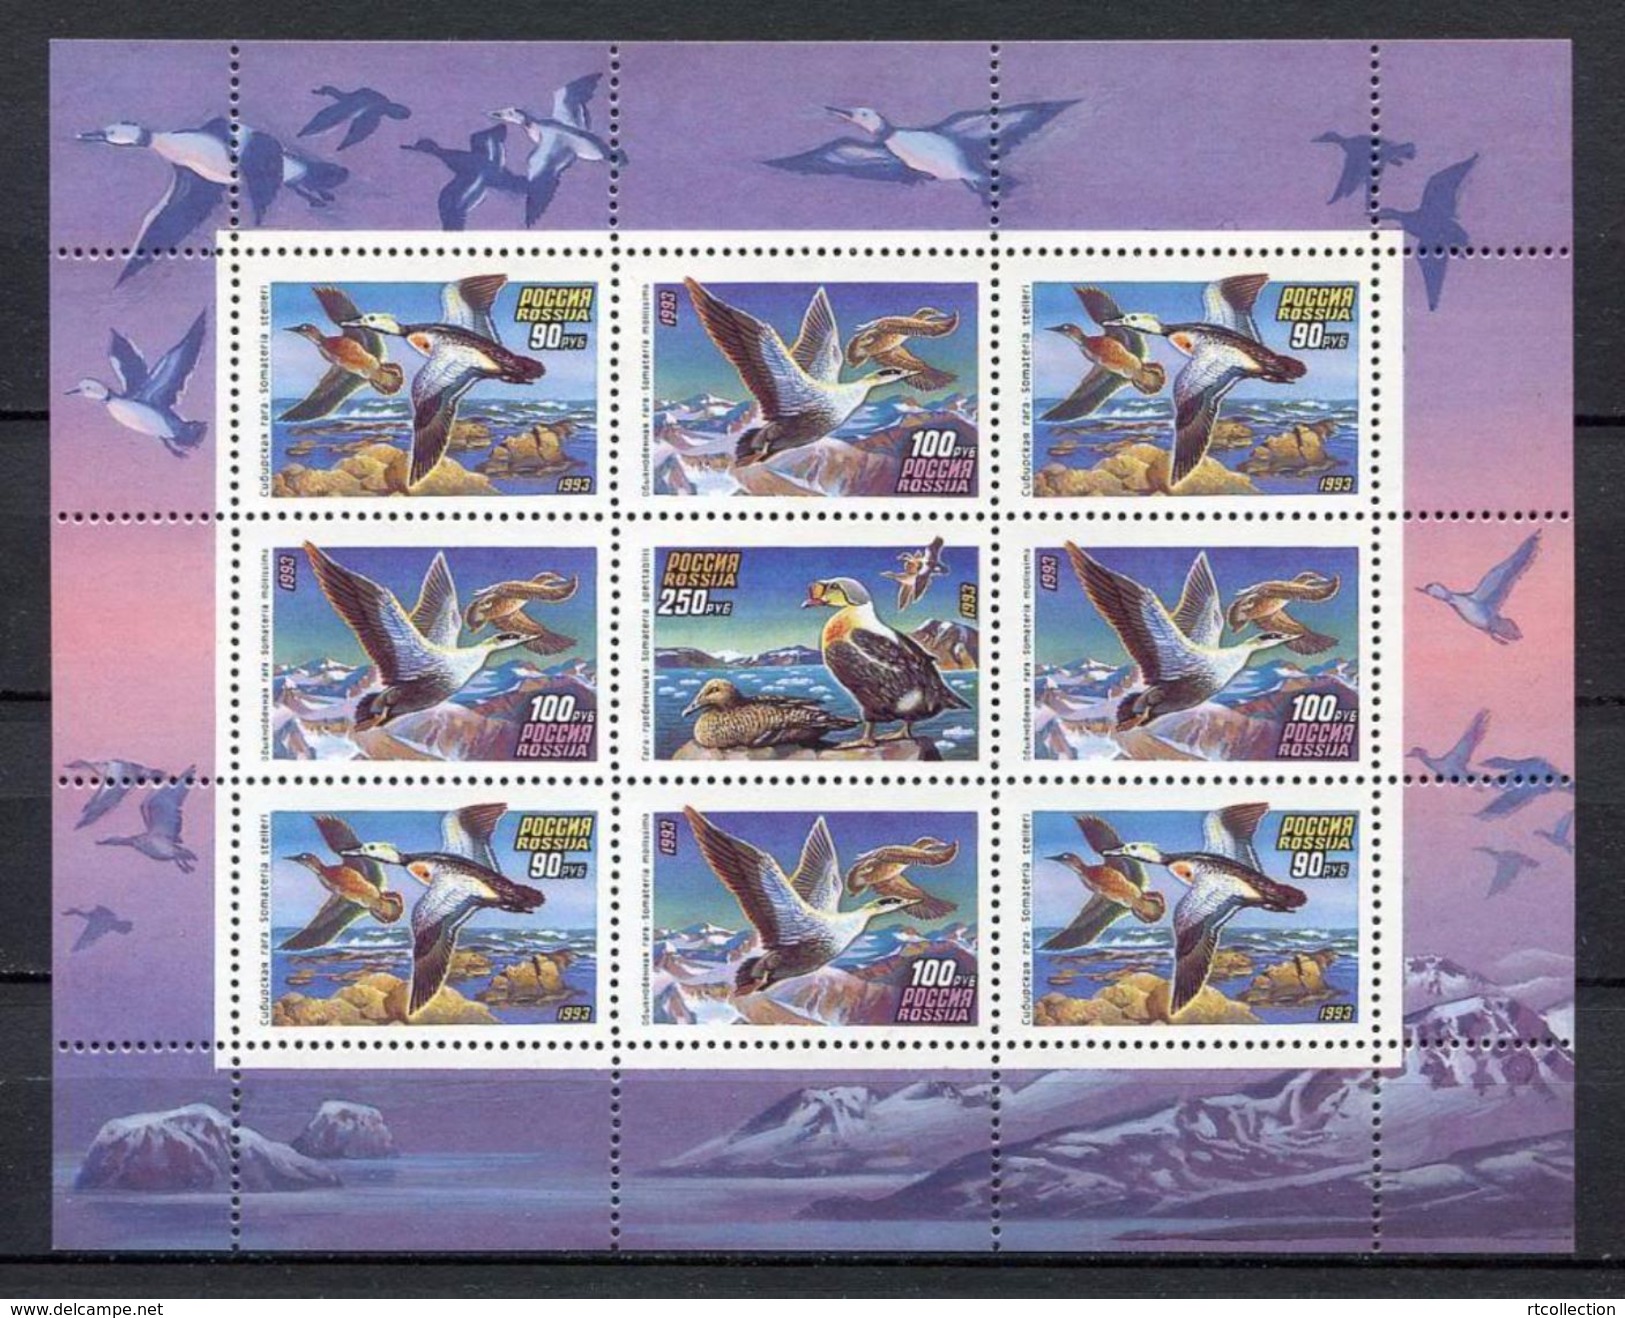 Russia 1993 S/S Ducks Duck Birds Bird Animals Animal Fauna Nature MNH Stamps Michel 320-322 Klb Scott#6157a - Collezioni